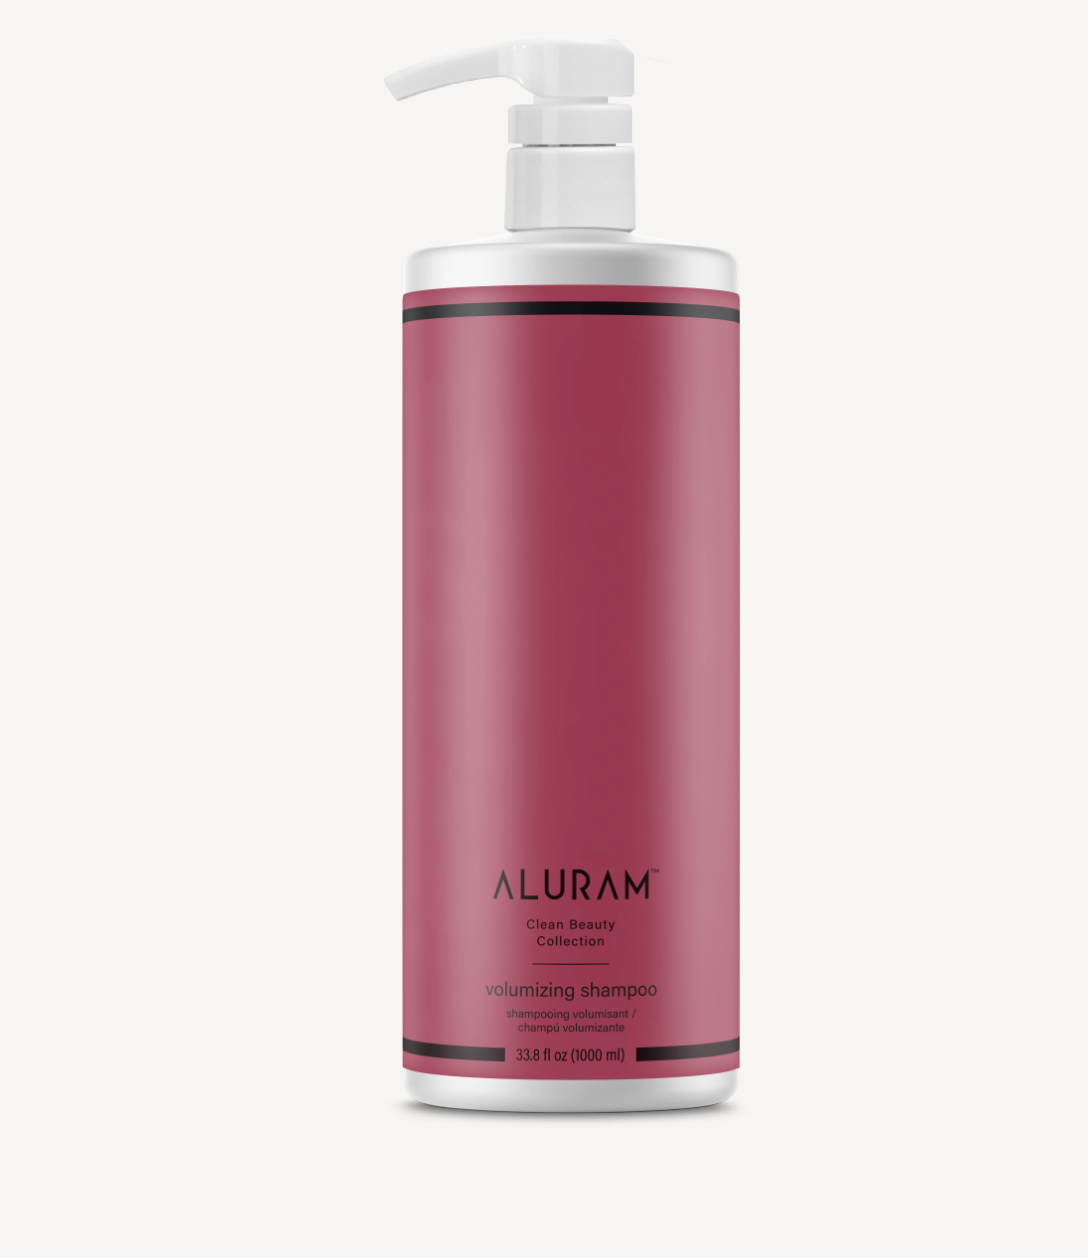 Aluram Volume Shampoo